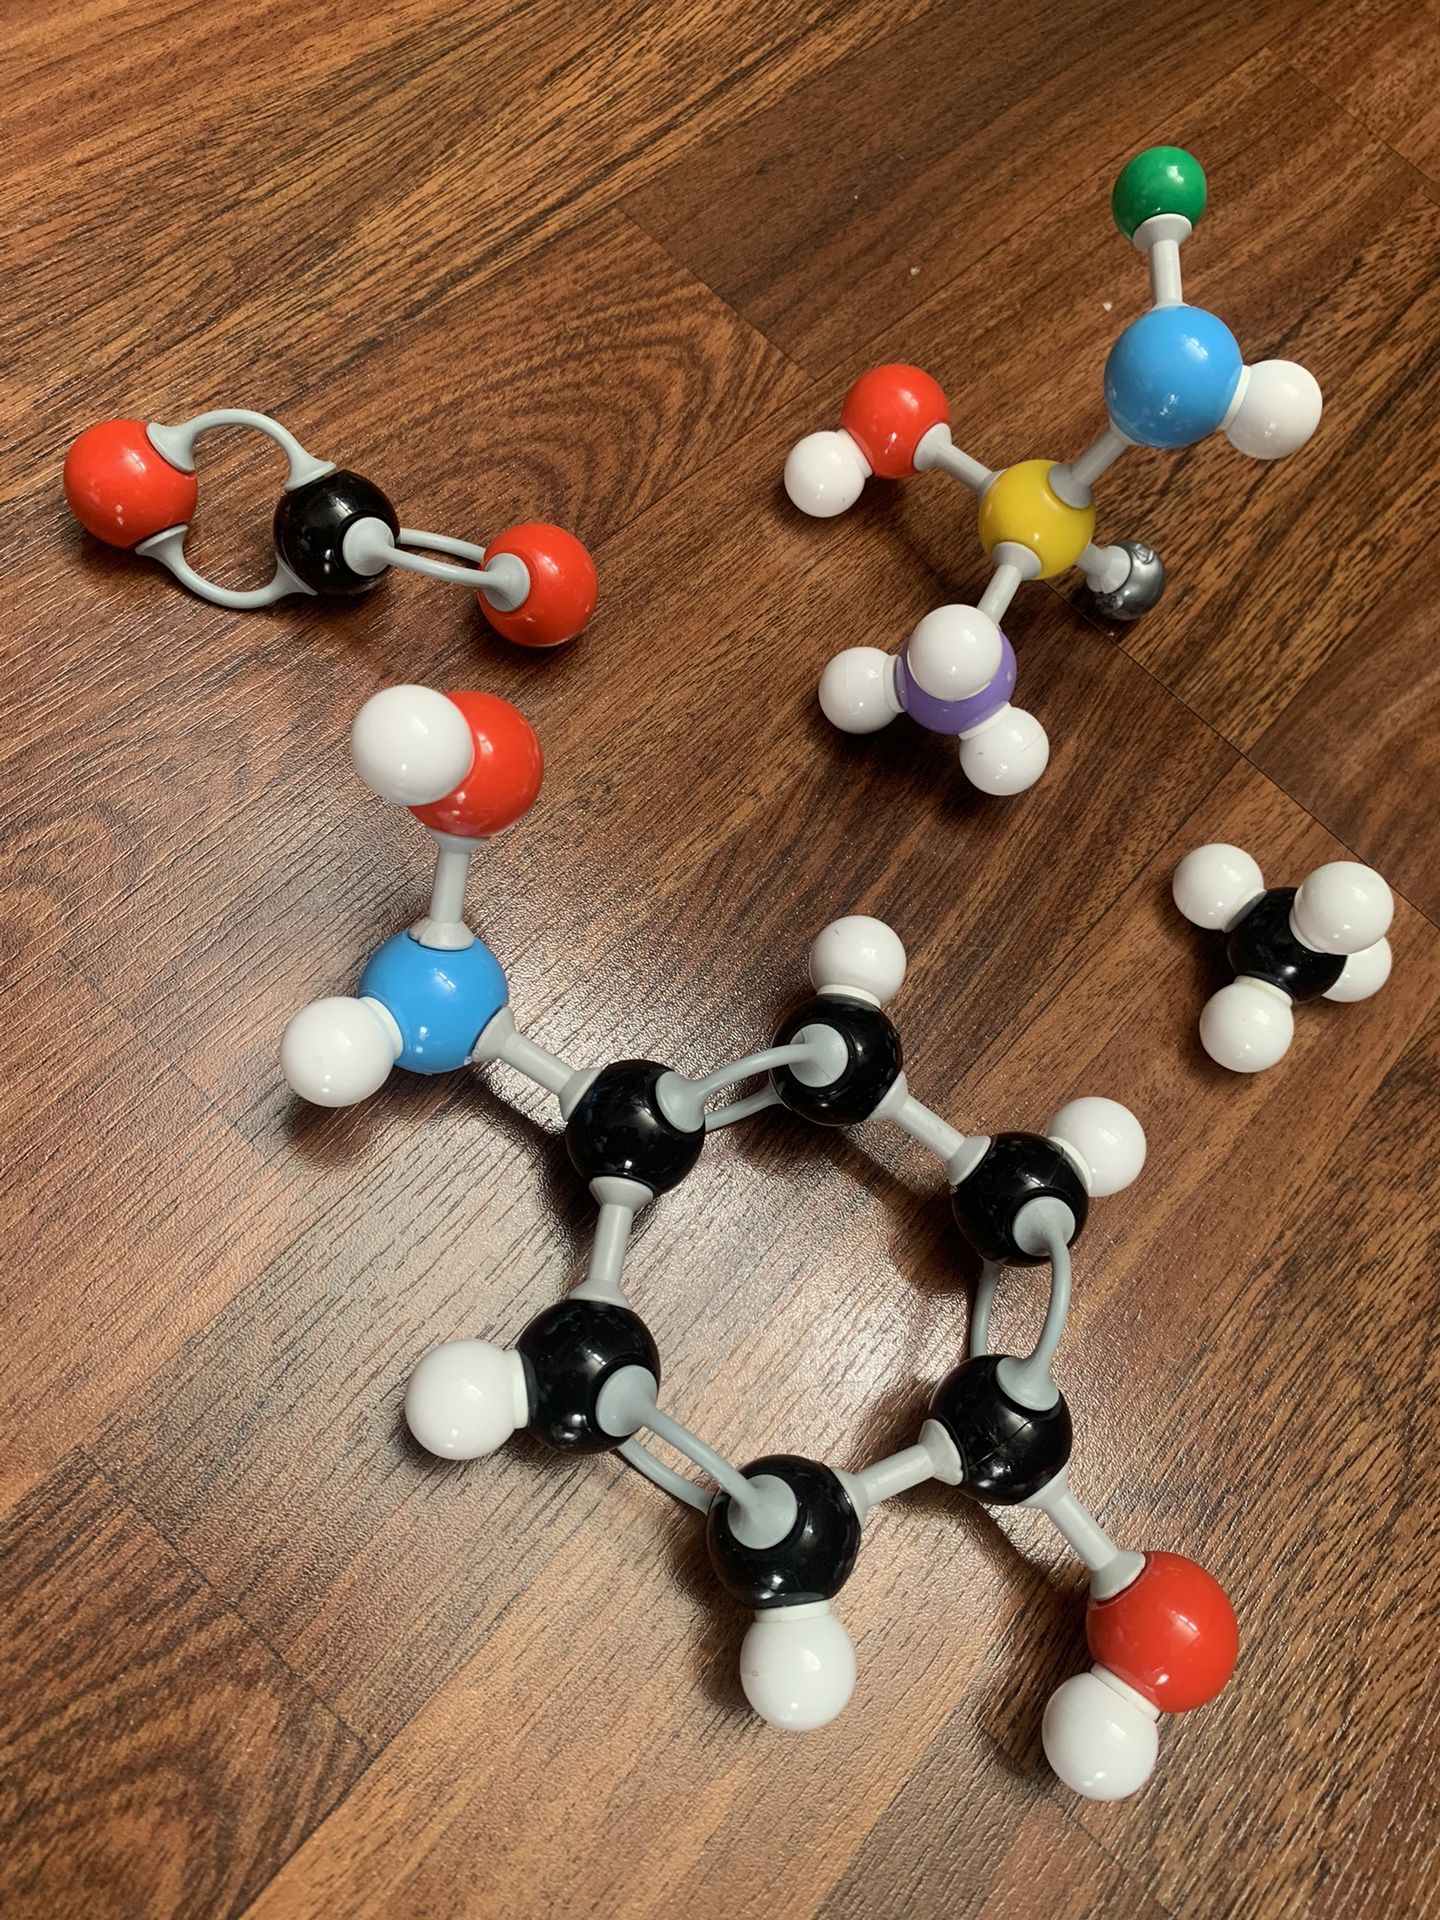 Chemistry Molecule Model Kit!